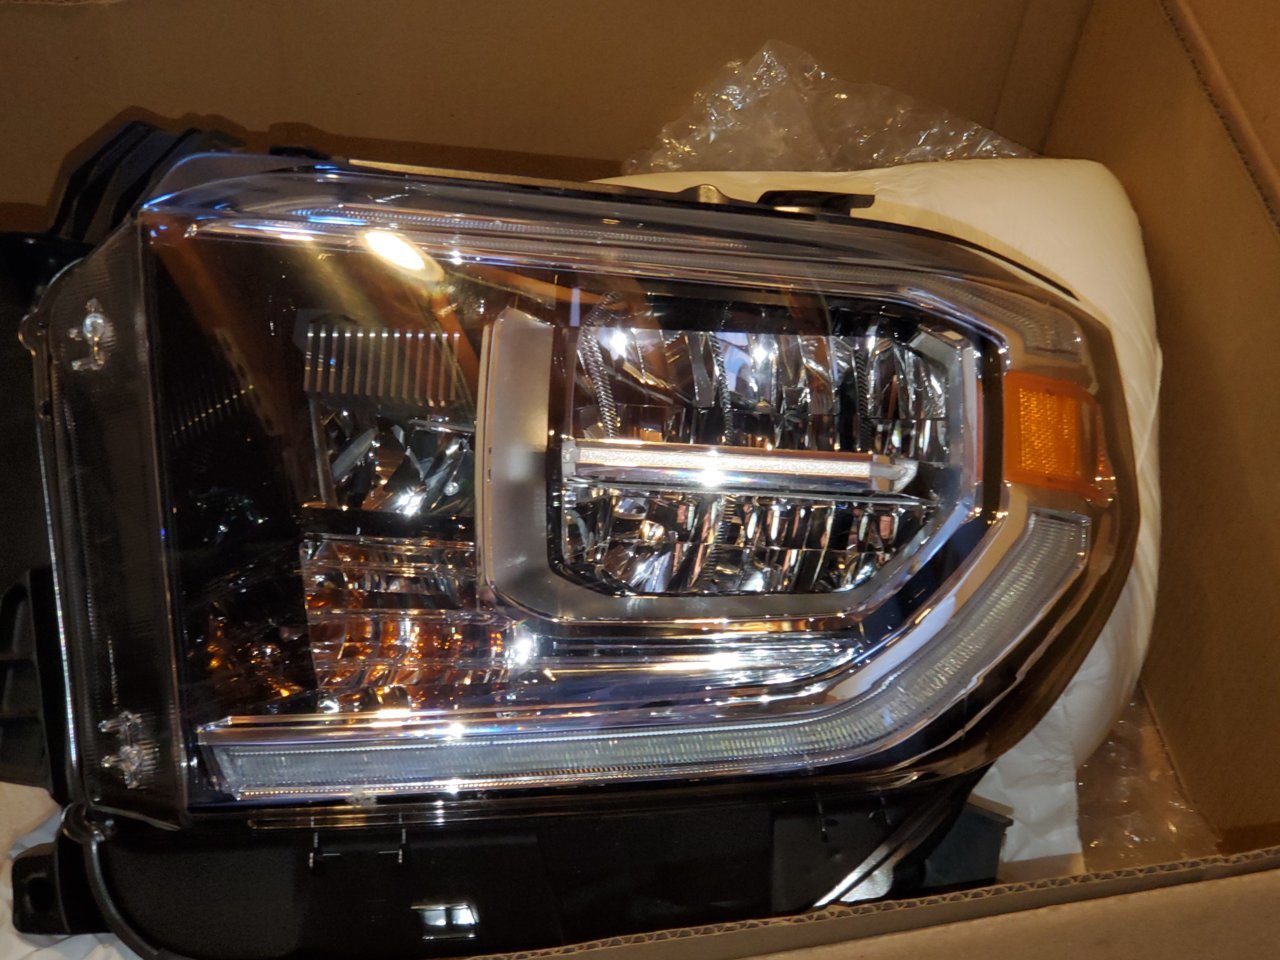 2020 OEM Led headlights-SOLD | Toyota Tundra Forum